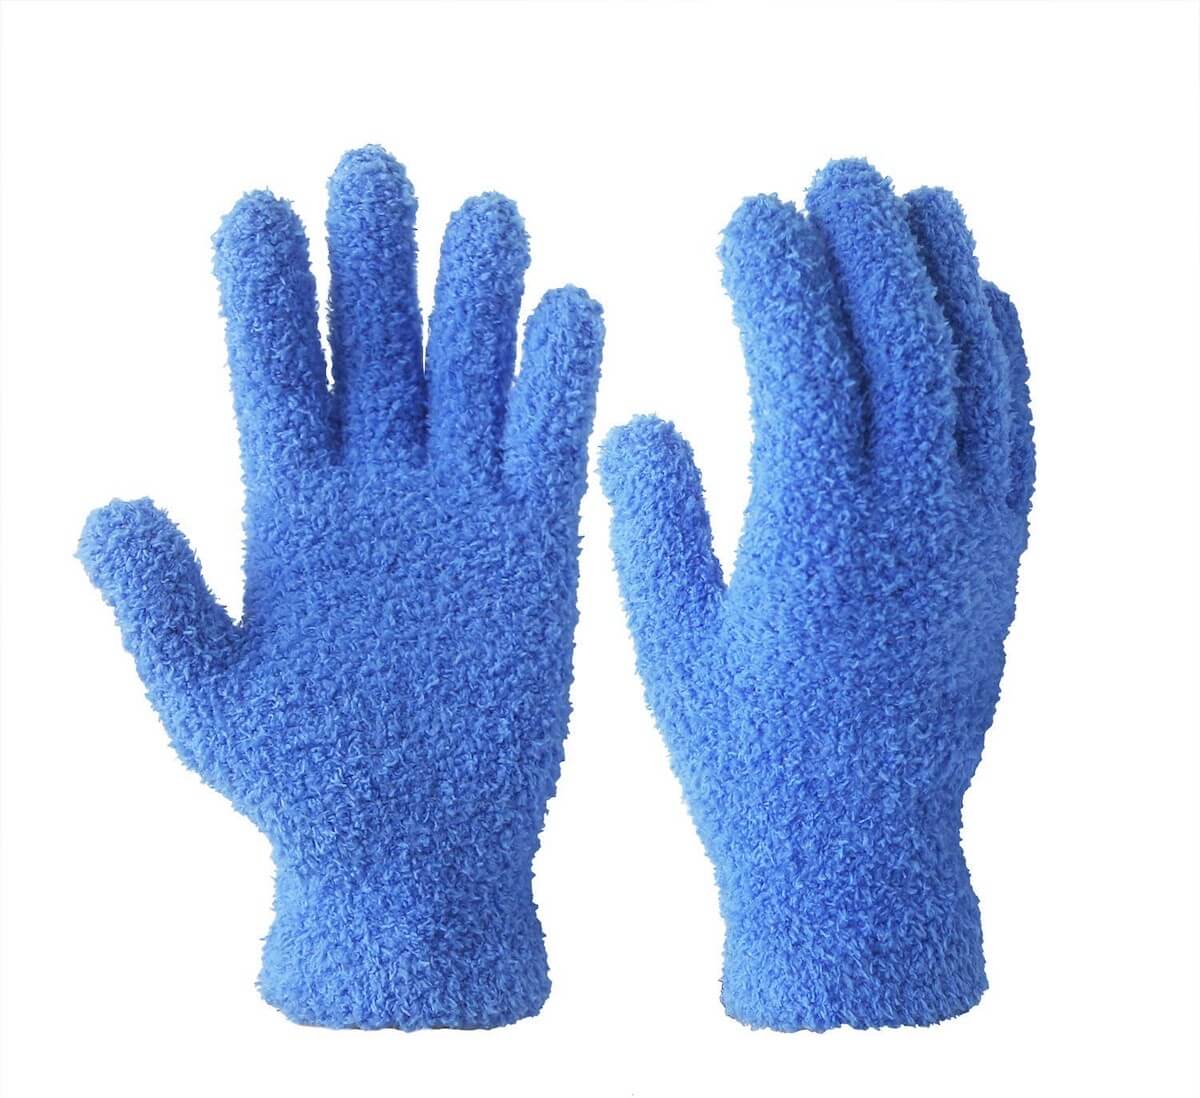 Microfiber dusting glove